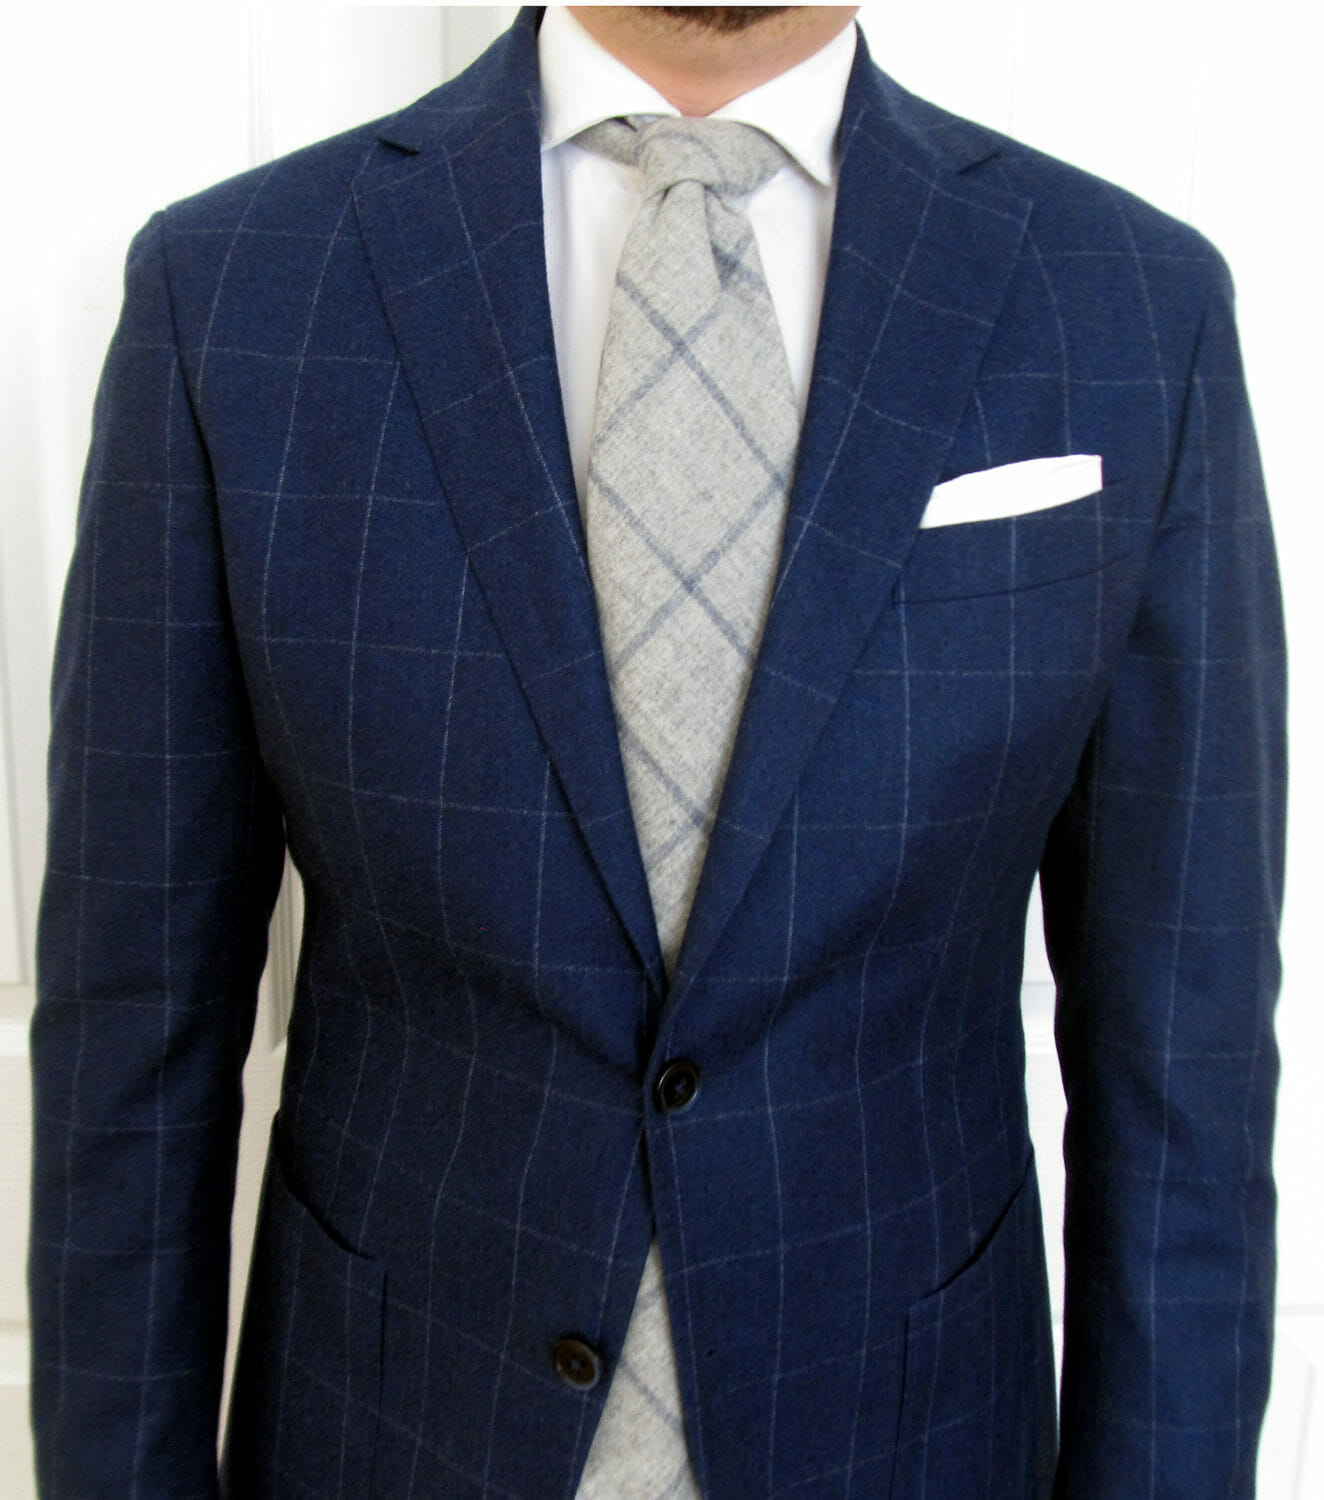 Windowpane Suit with Gray Windowpane Tie